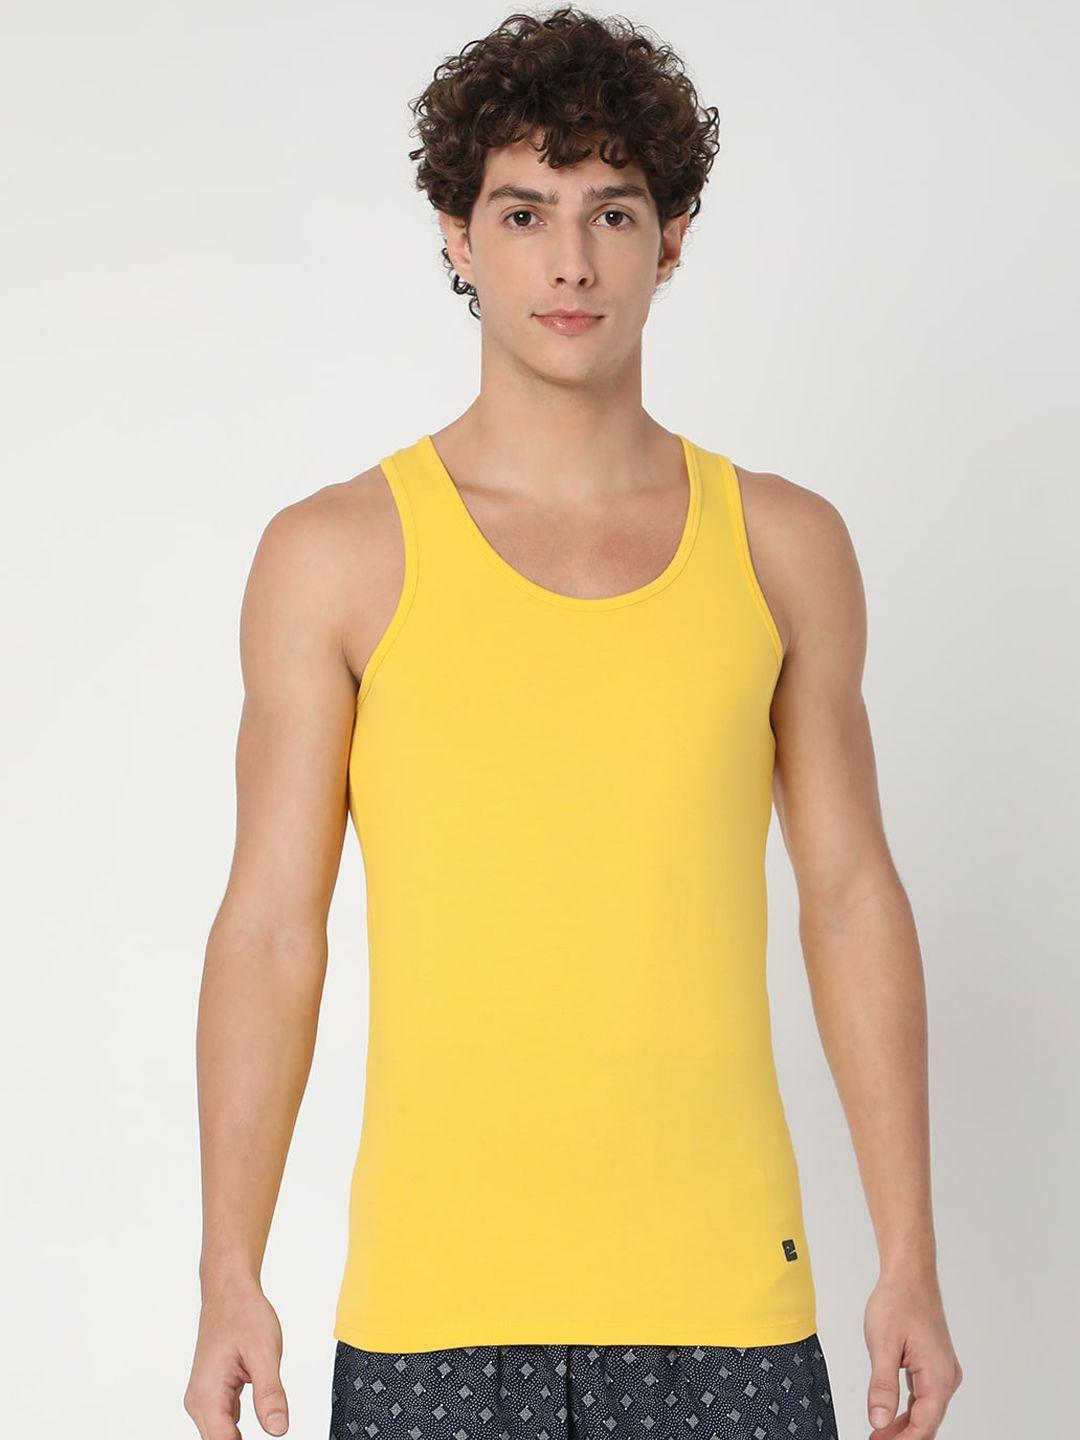 underjeans by spykar men yellow solid basic innerwear vests